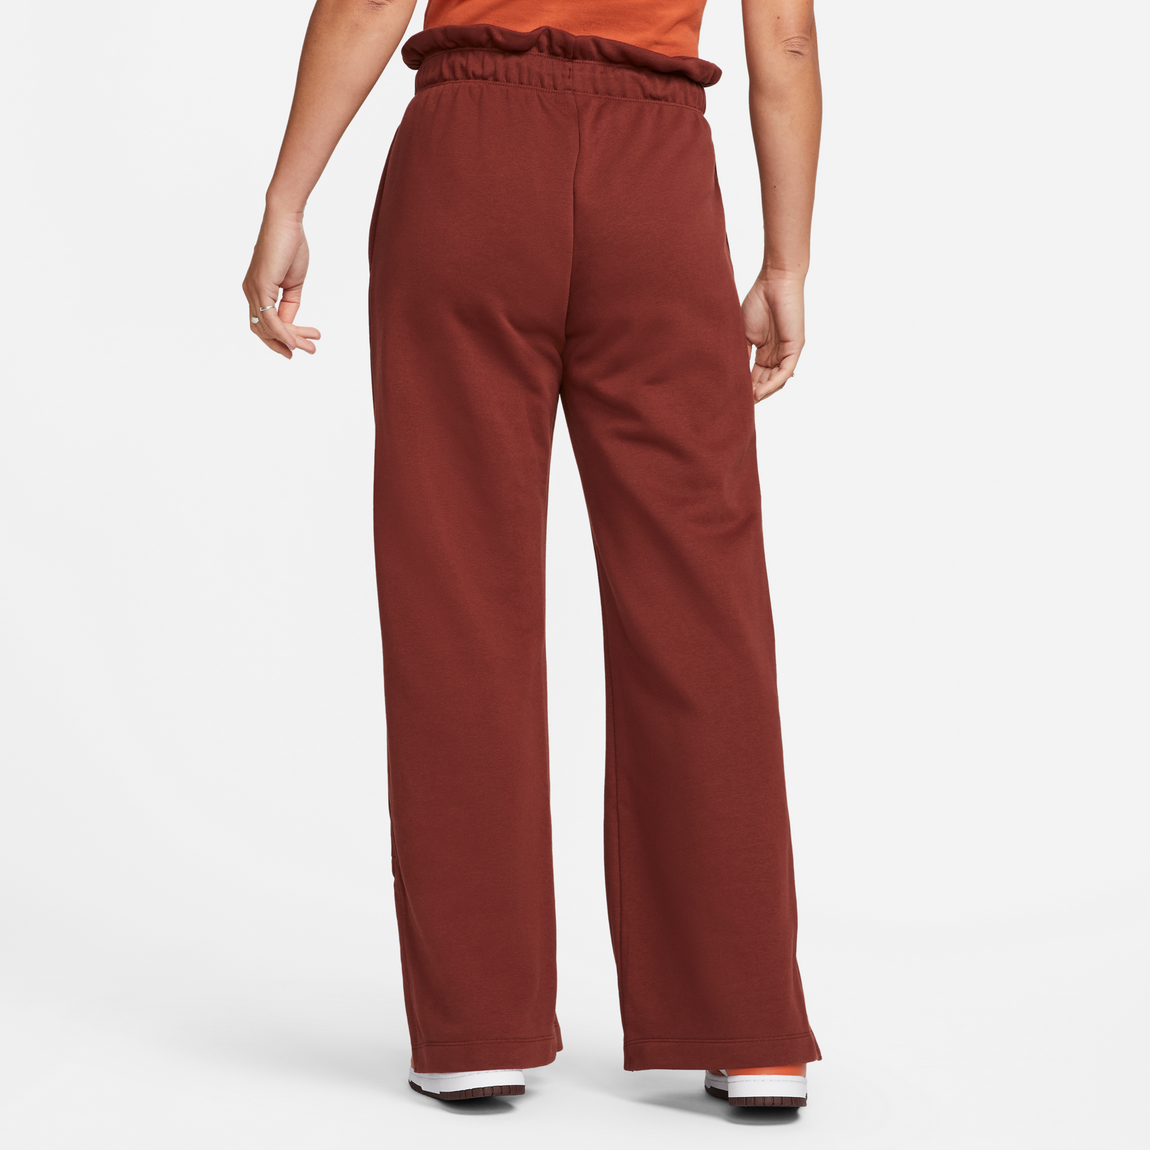 Nike Sportswear Women's Everyday Modern Pants (Oxen Brown/Cinnabar) – Centre